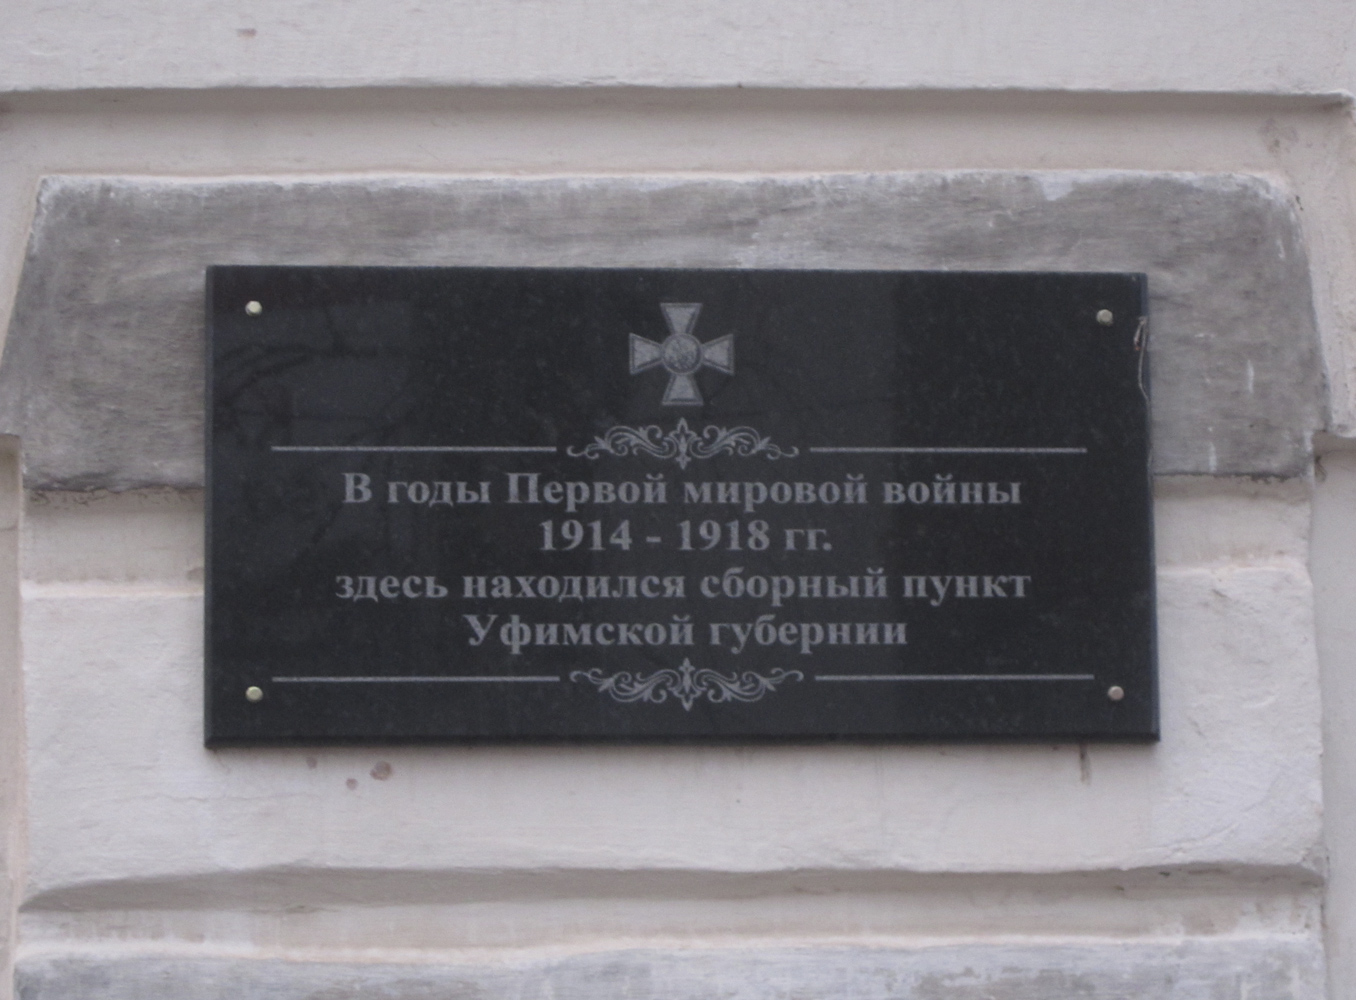 Ufa, Улица Карла Маркса, 55/1. Ufa — Memorial plaques